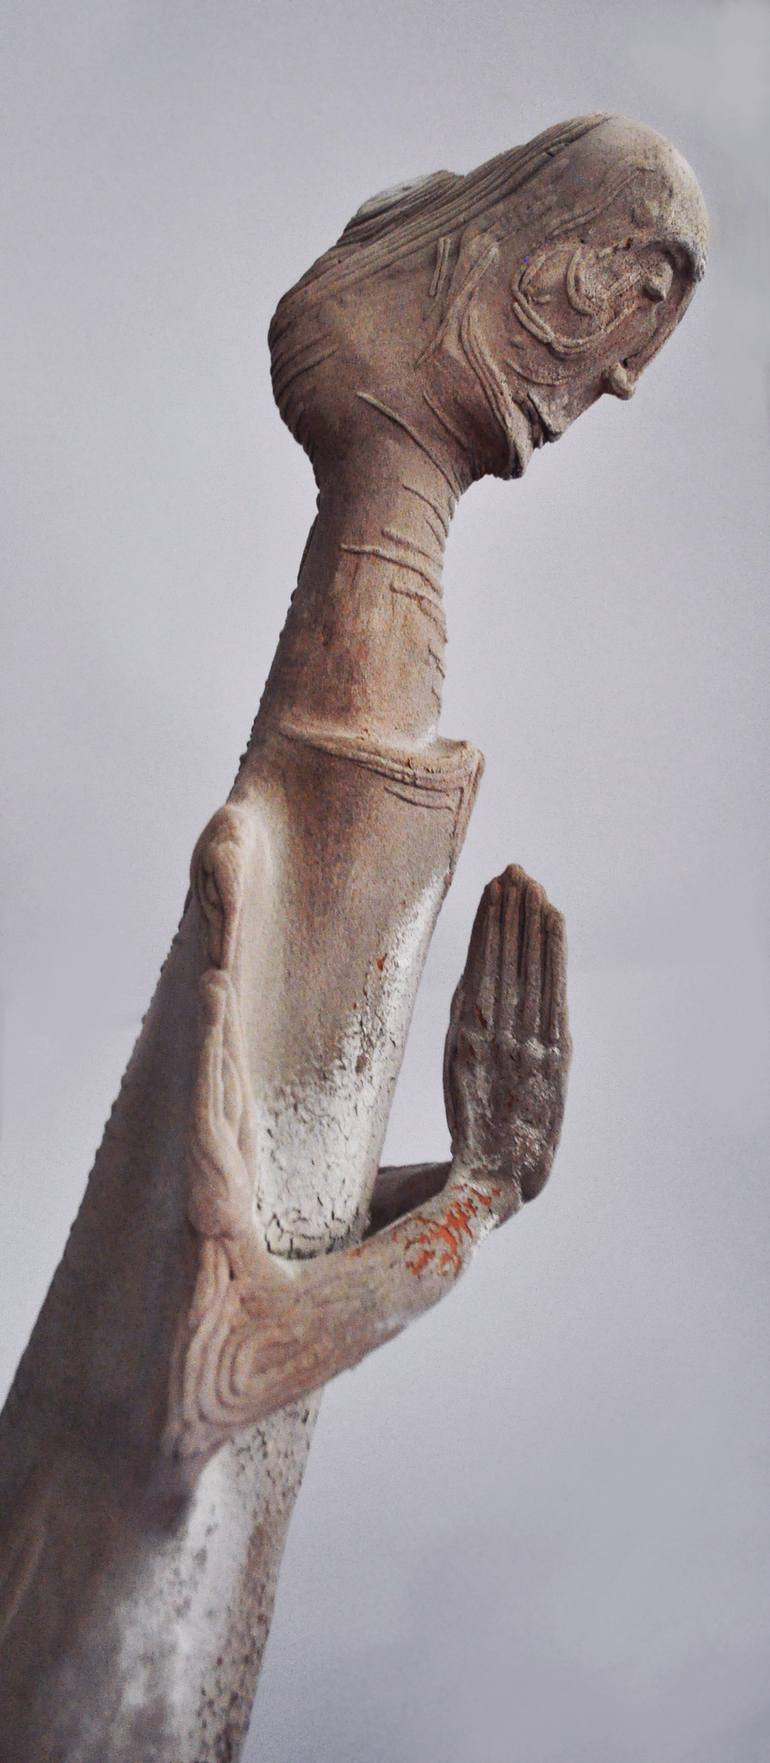 Original Religious Sculpture by Andrei Alupoaie